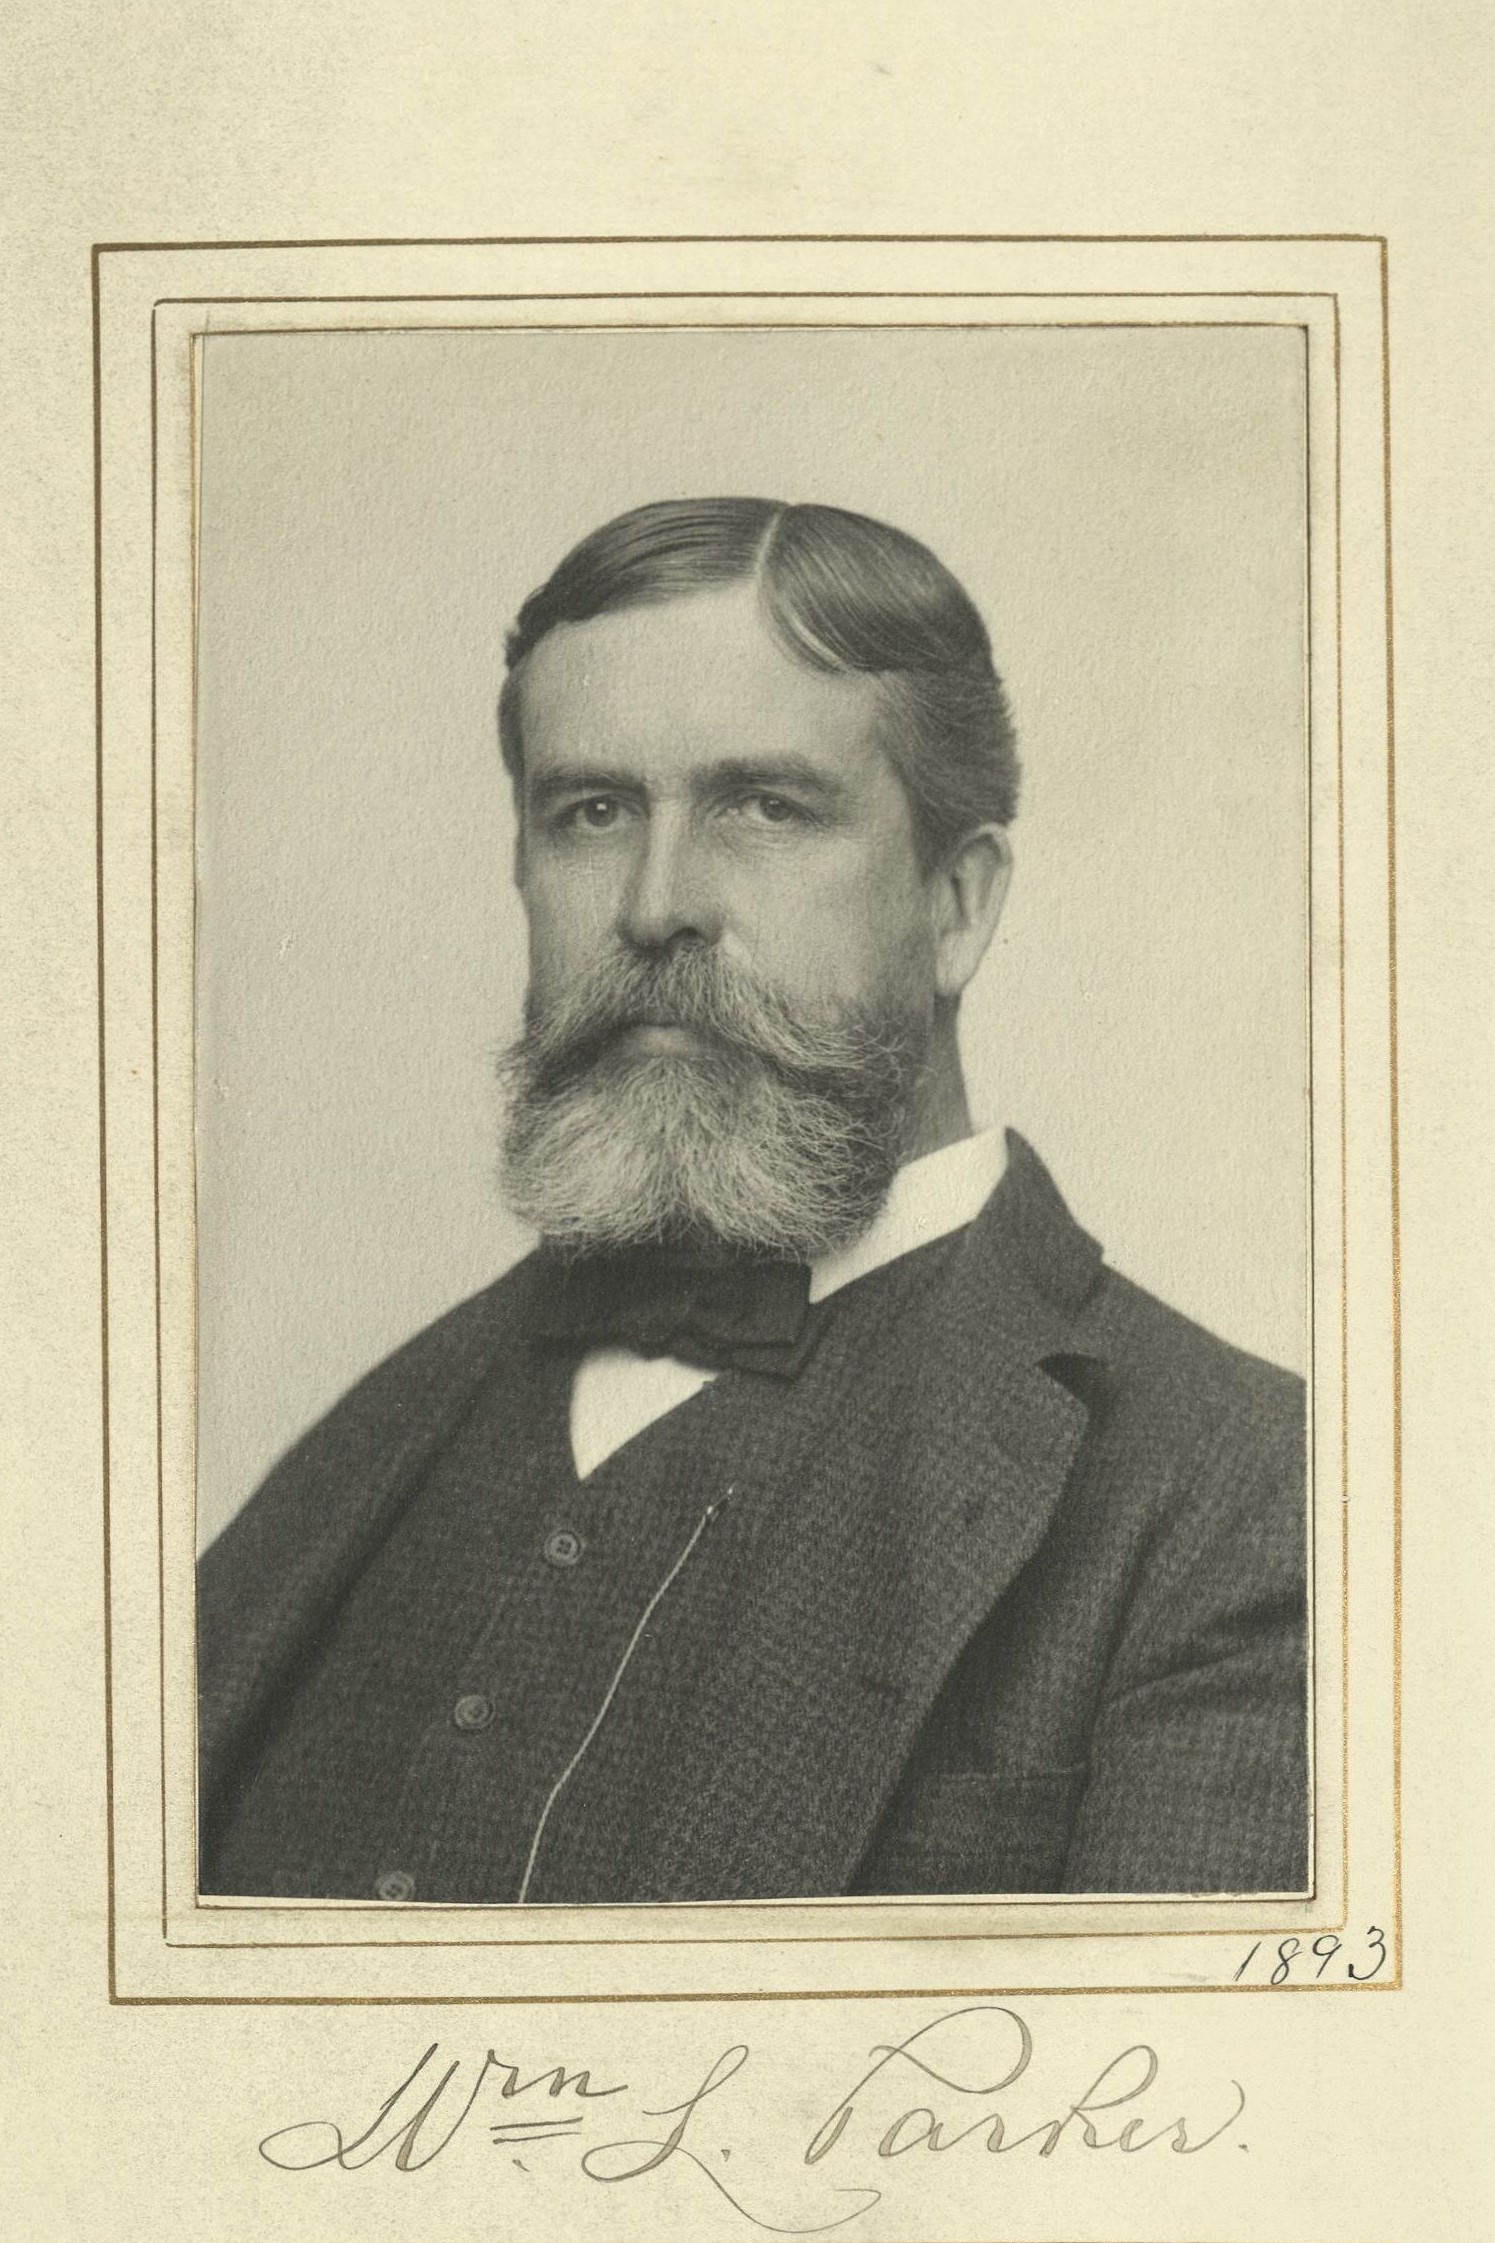 Member portrait of William L. Parker